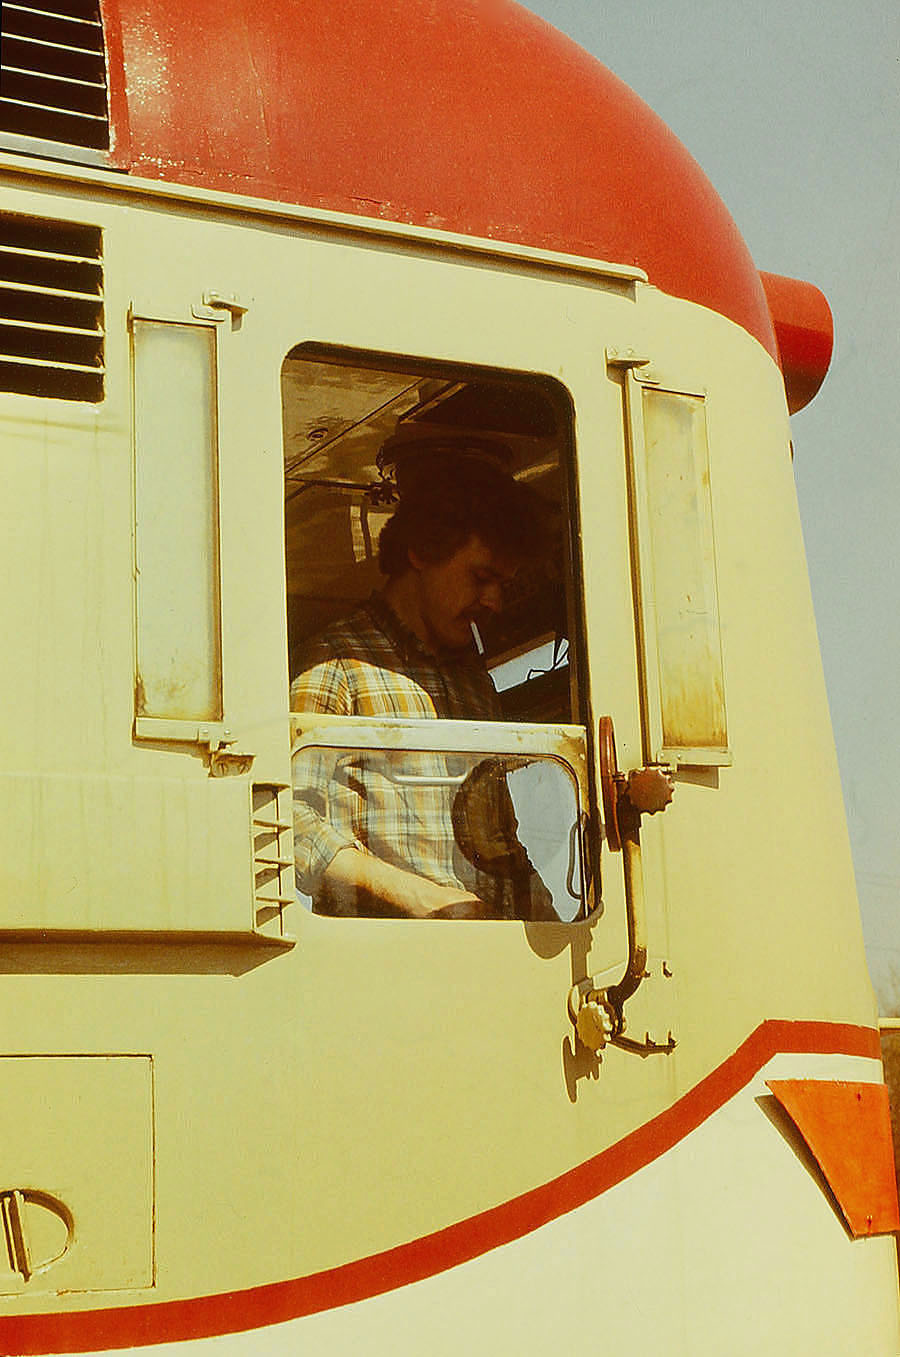 D1-616-3
08.04.1981
Lelle
Train driver Tõnu Sarapuu
